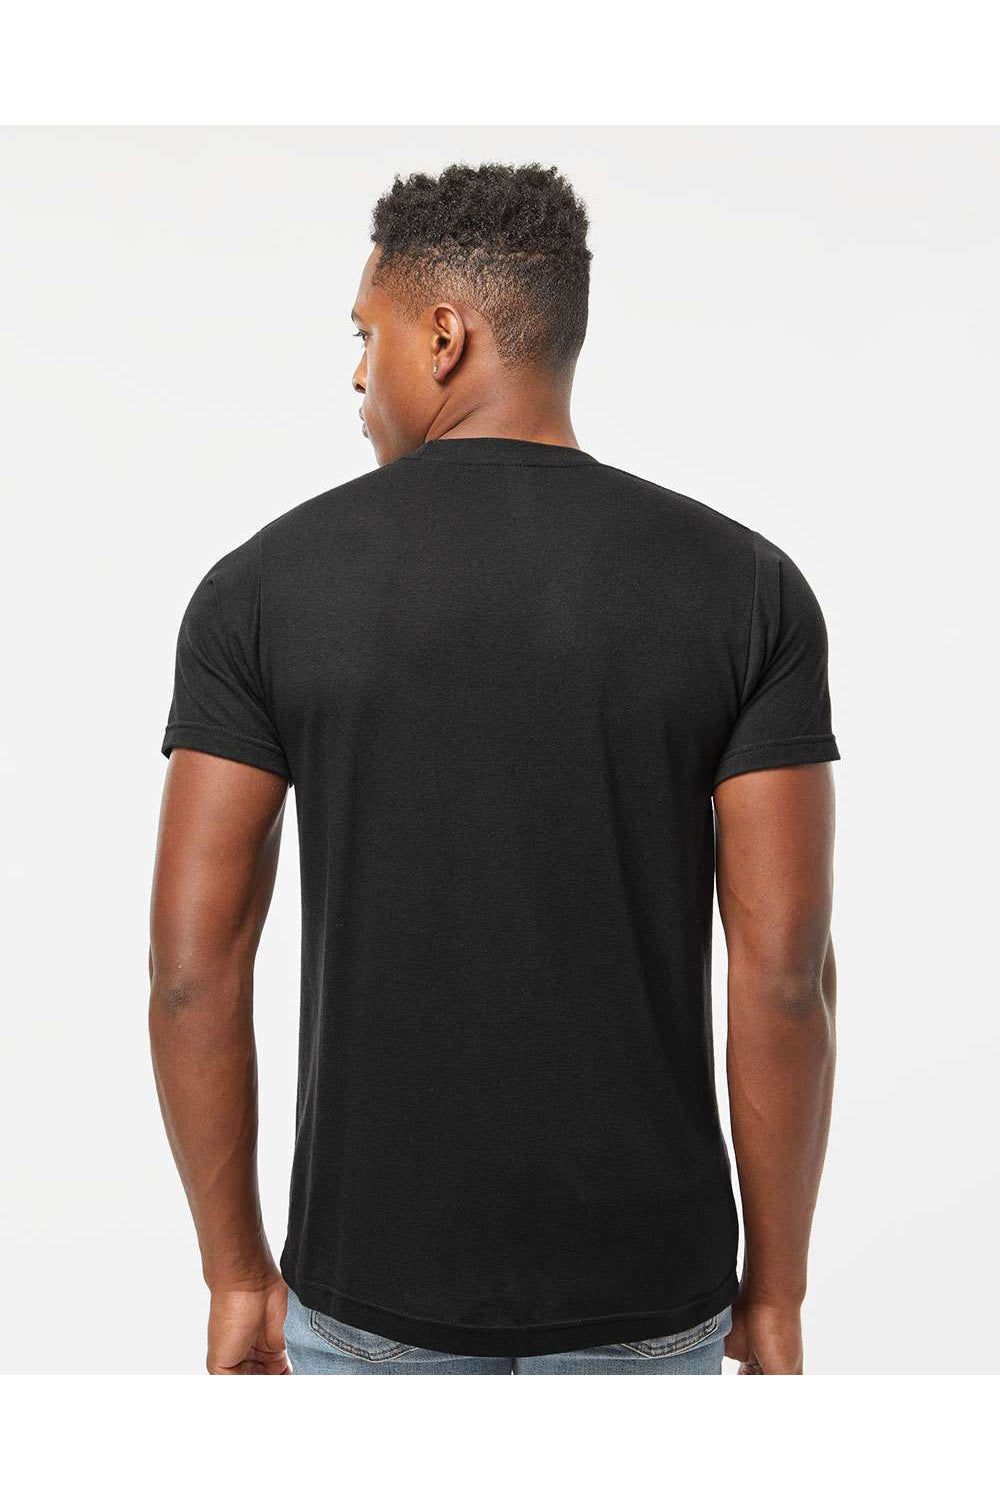 Tultex 254 Mens Short Sleeve Crewneck T-Shirt Black Model Back